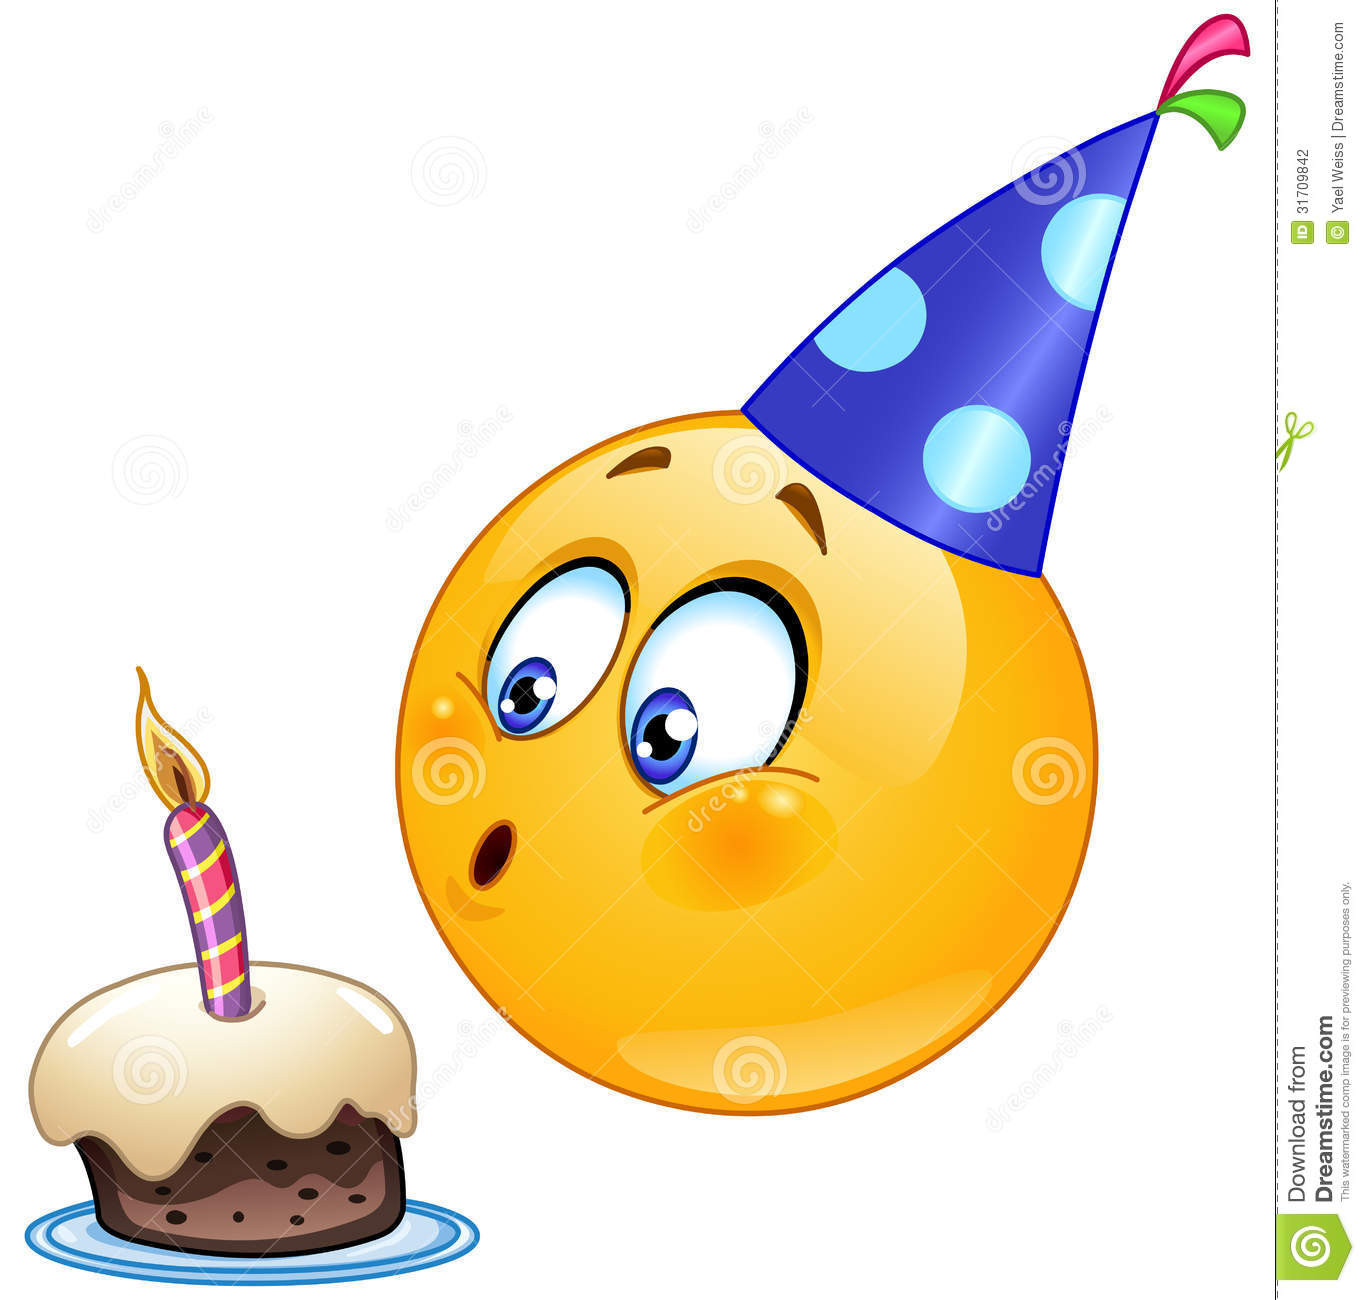 Birthday Cake Emoticon
 Birthday Emoticon Stock graphy Image